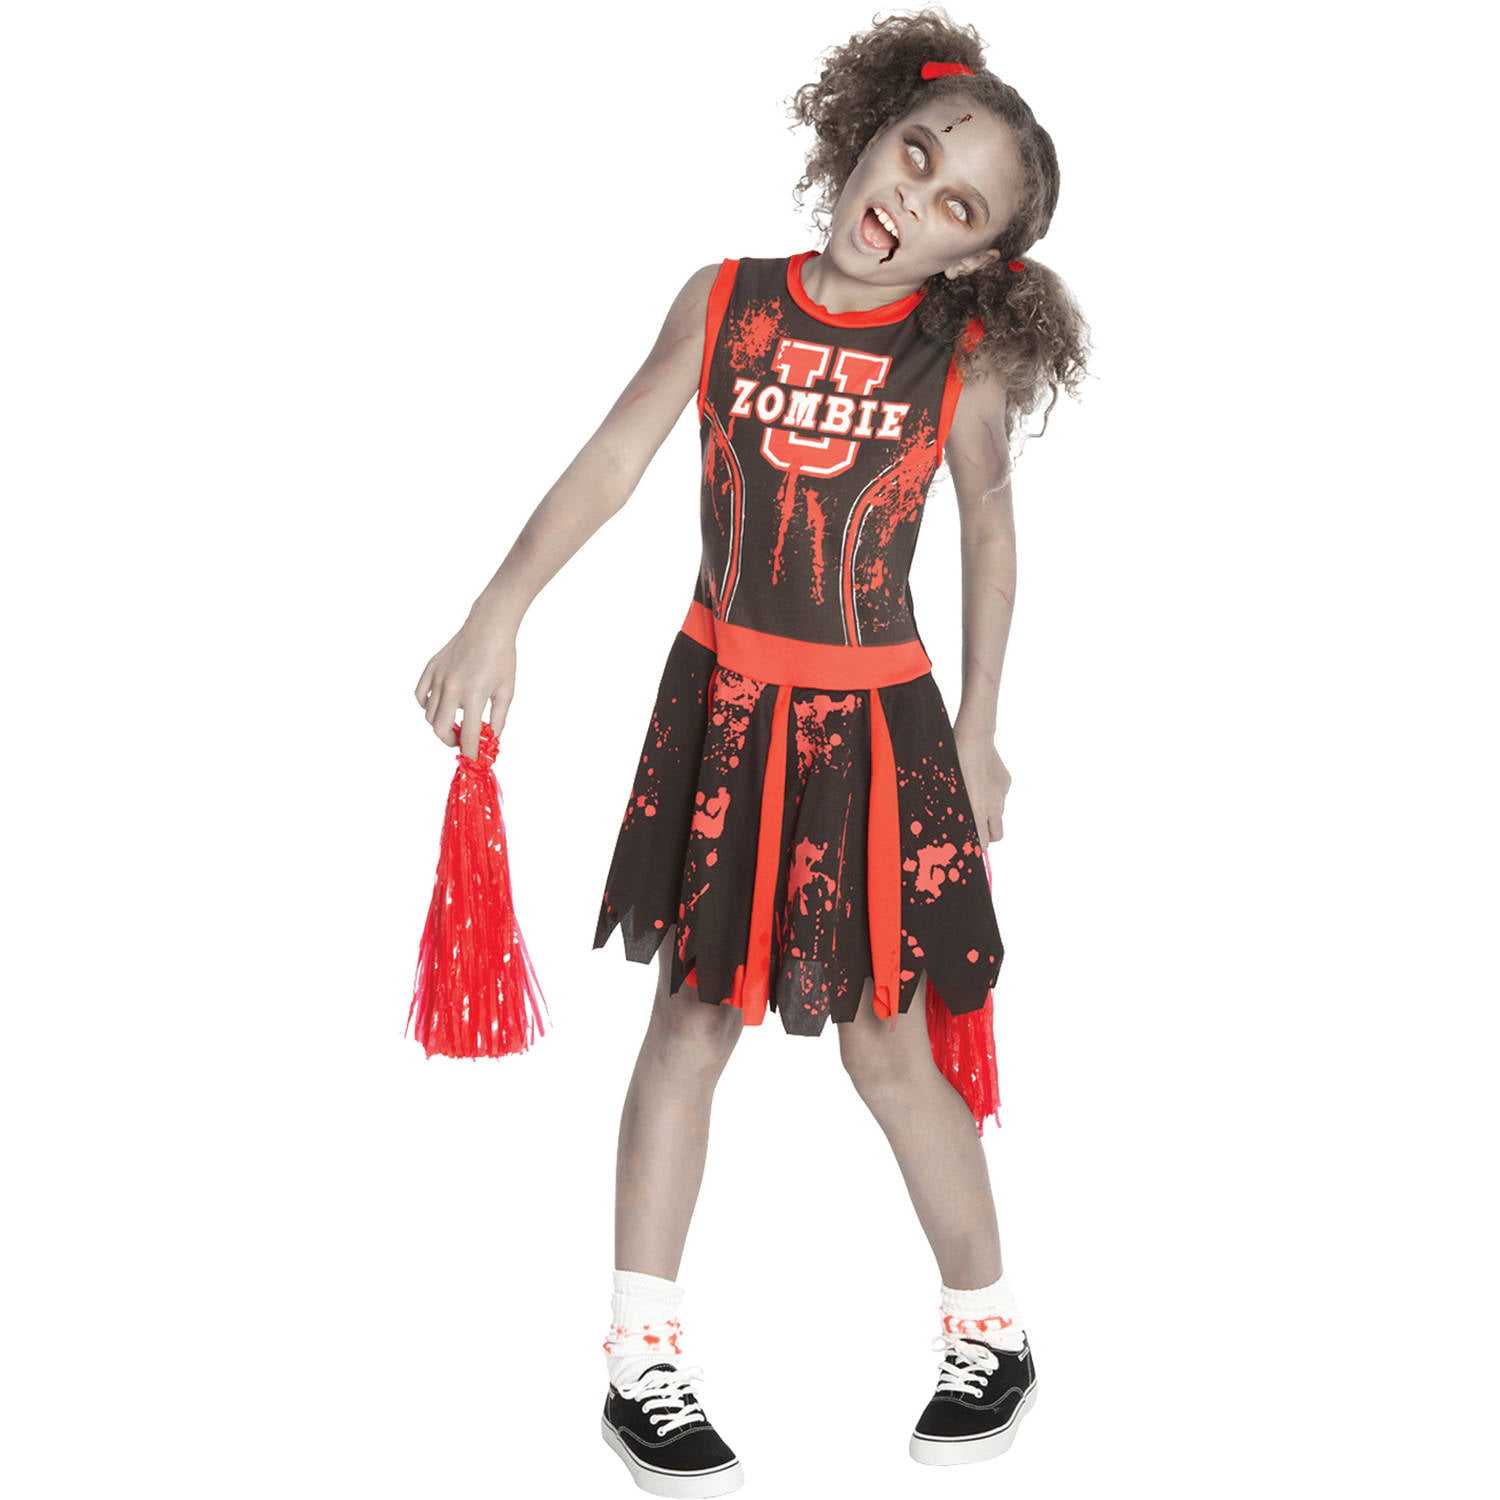 Undead Cheerleader Child Costume.